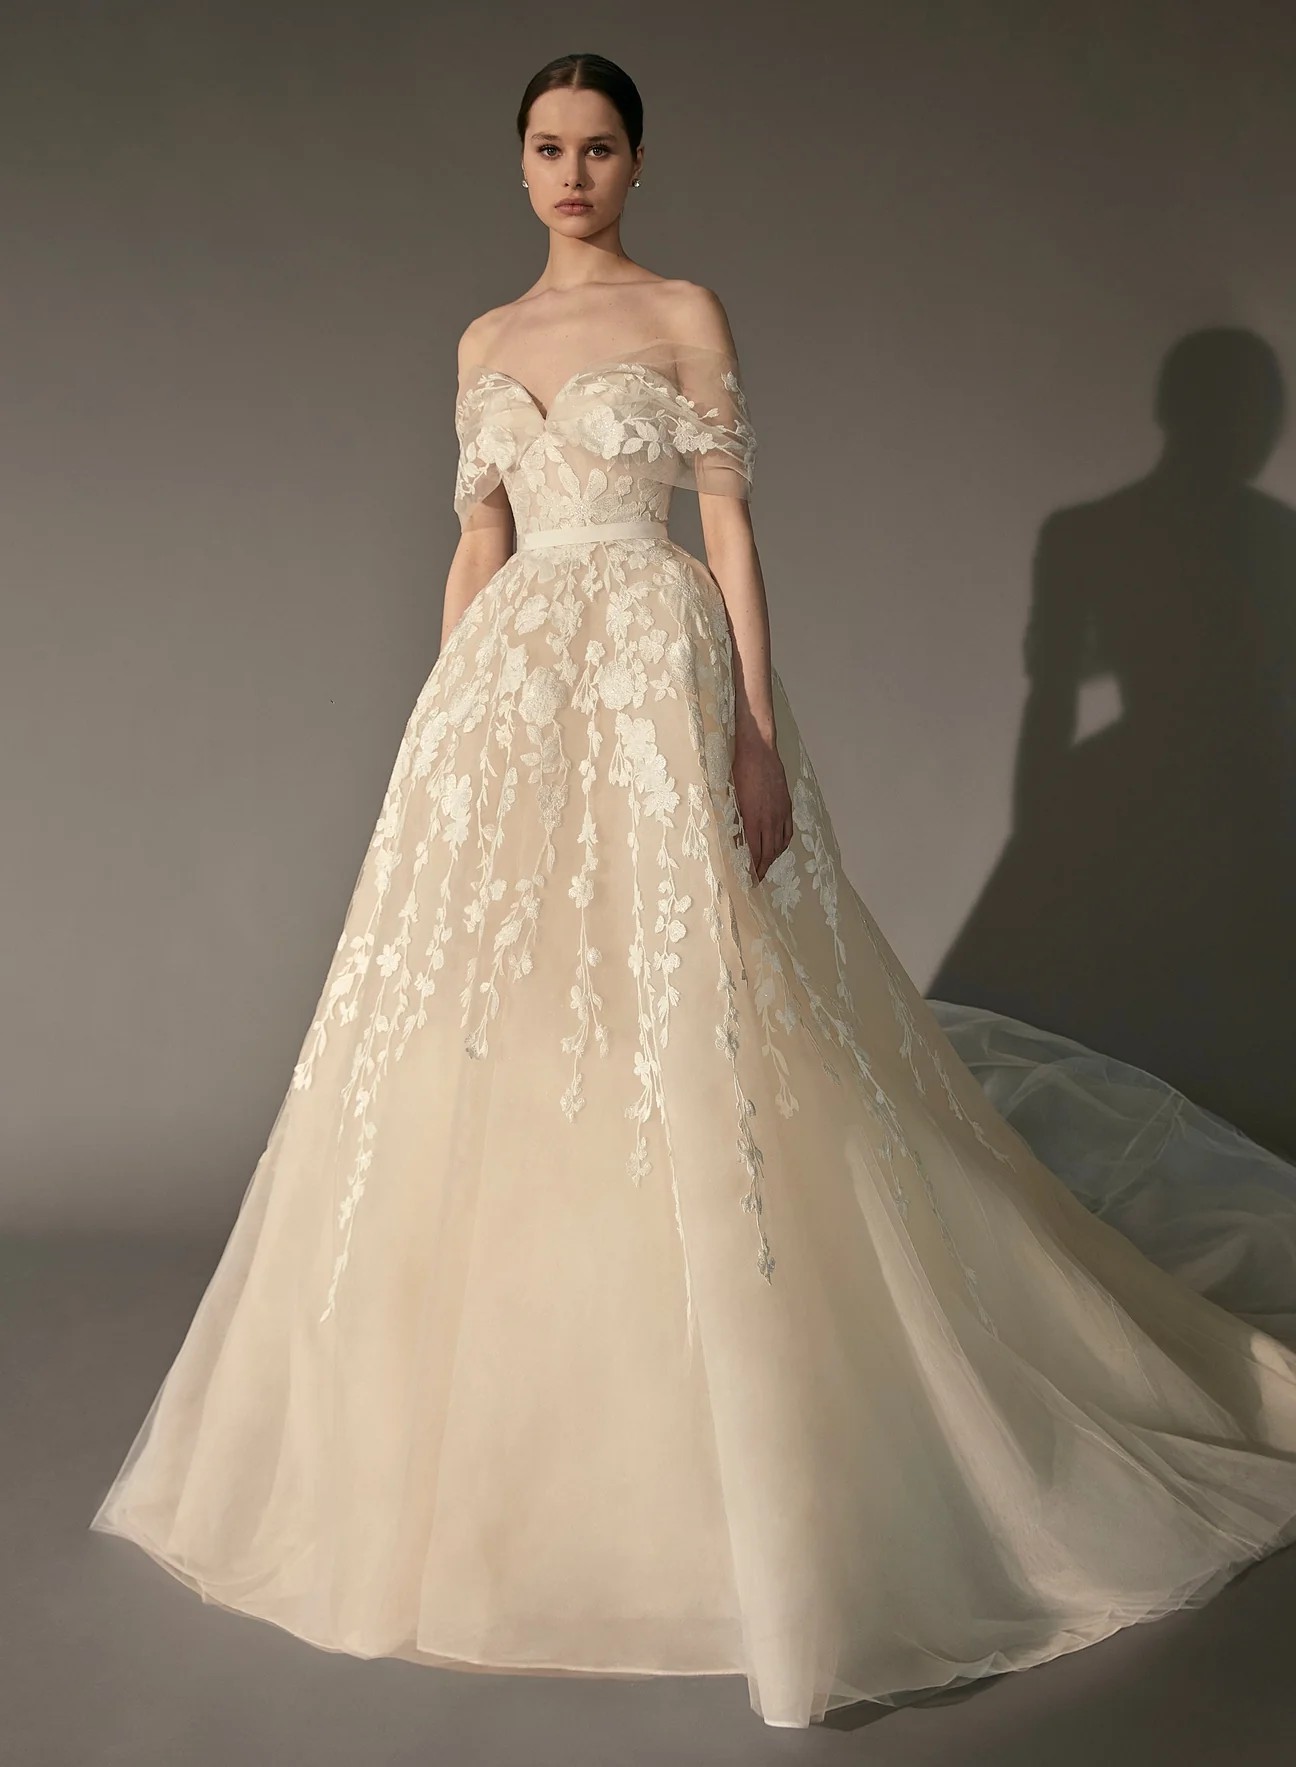 Elie Saab Spring 2023 Look 5 Wedding Dress Save 40% - Stillwhite